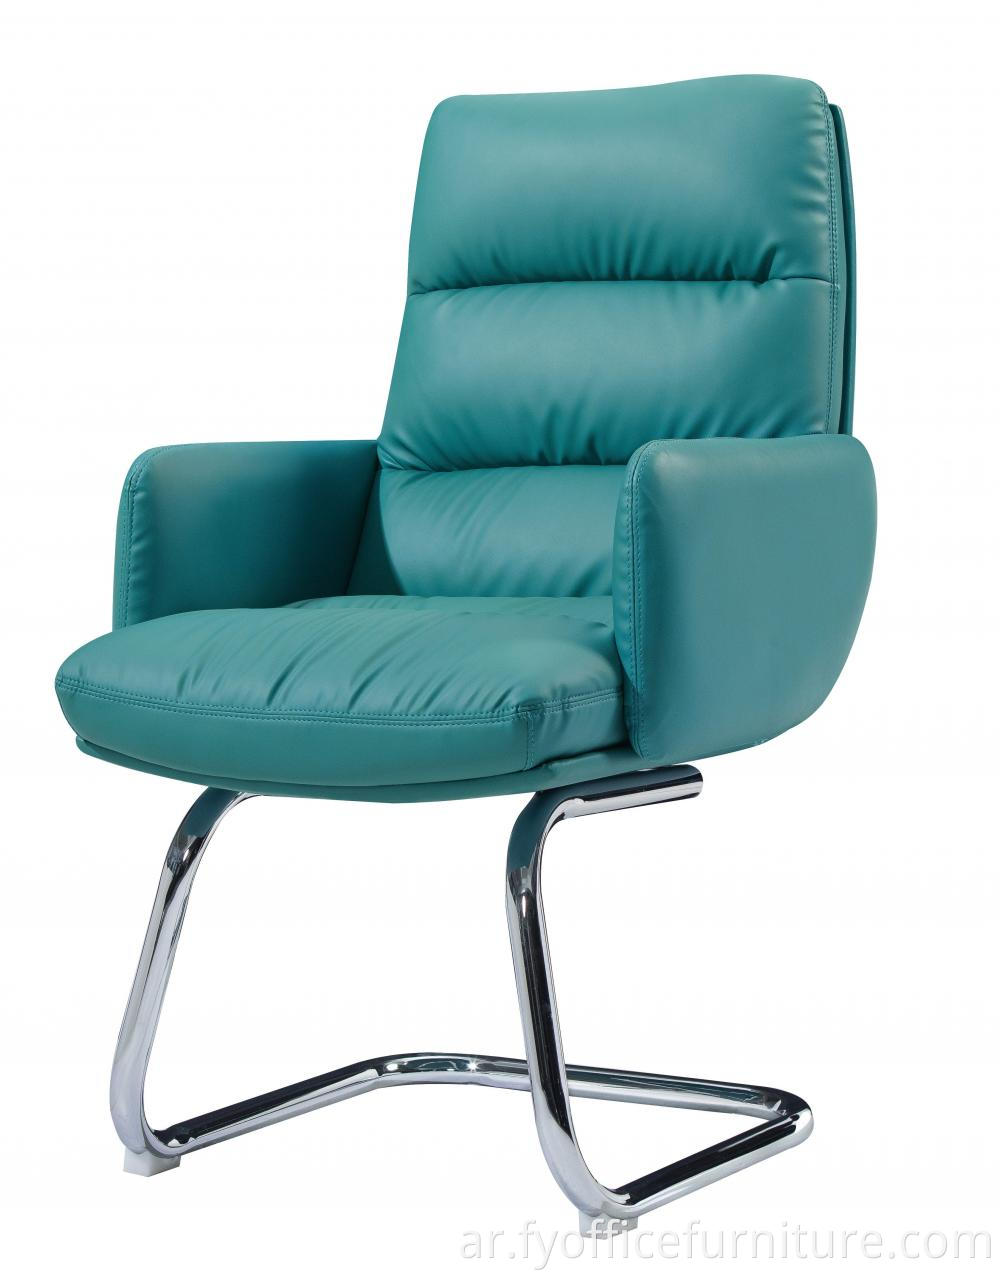 Adjustable Ergonomic chair